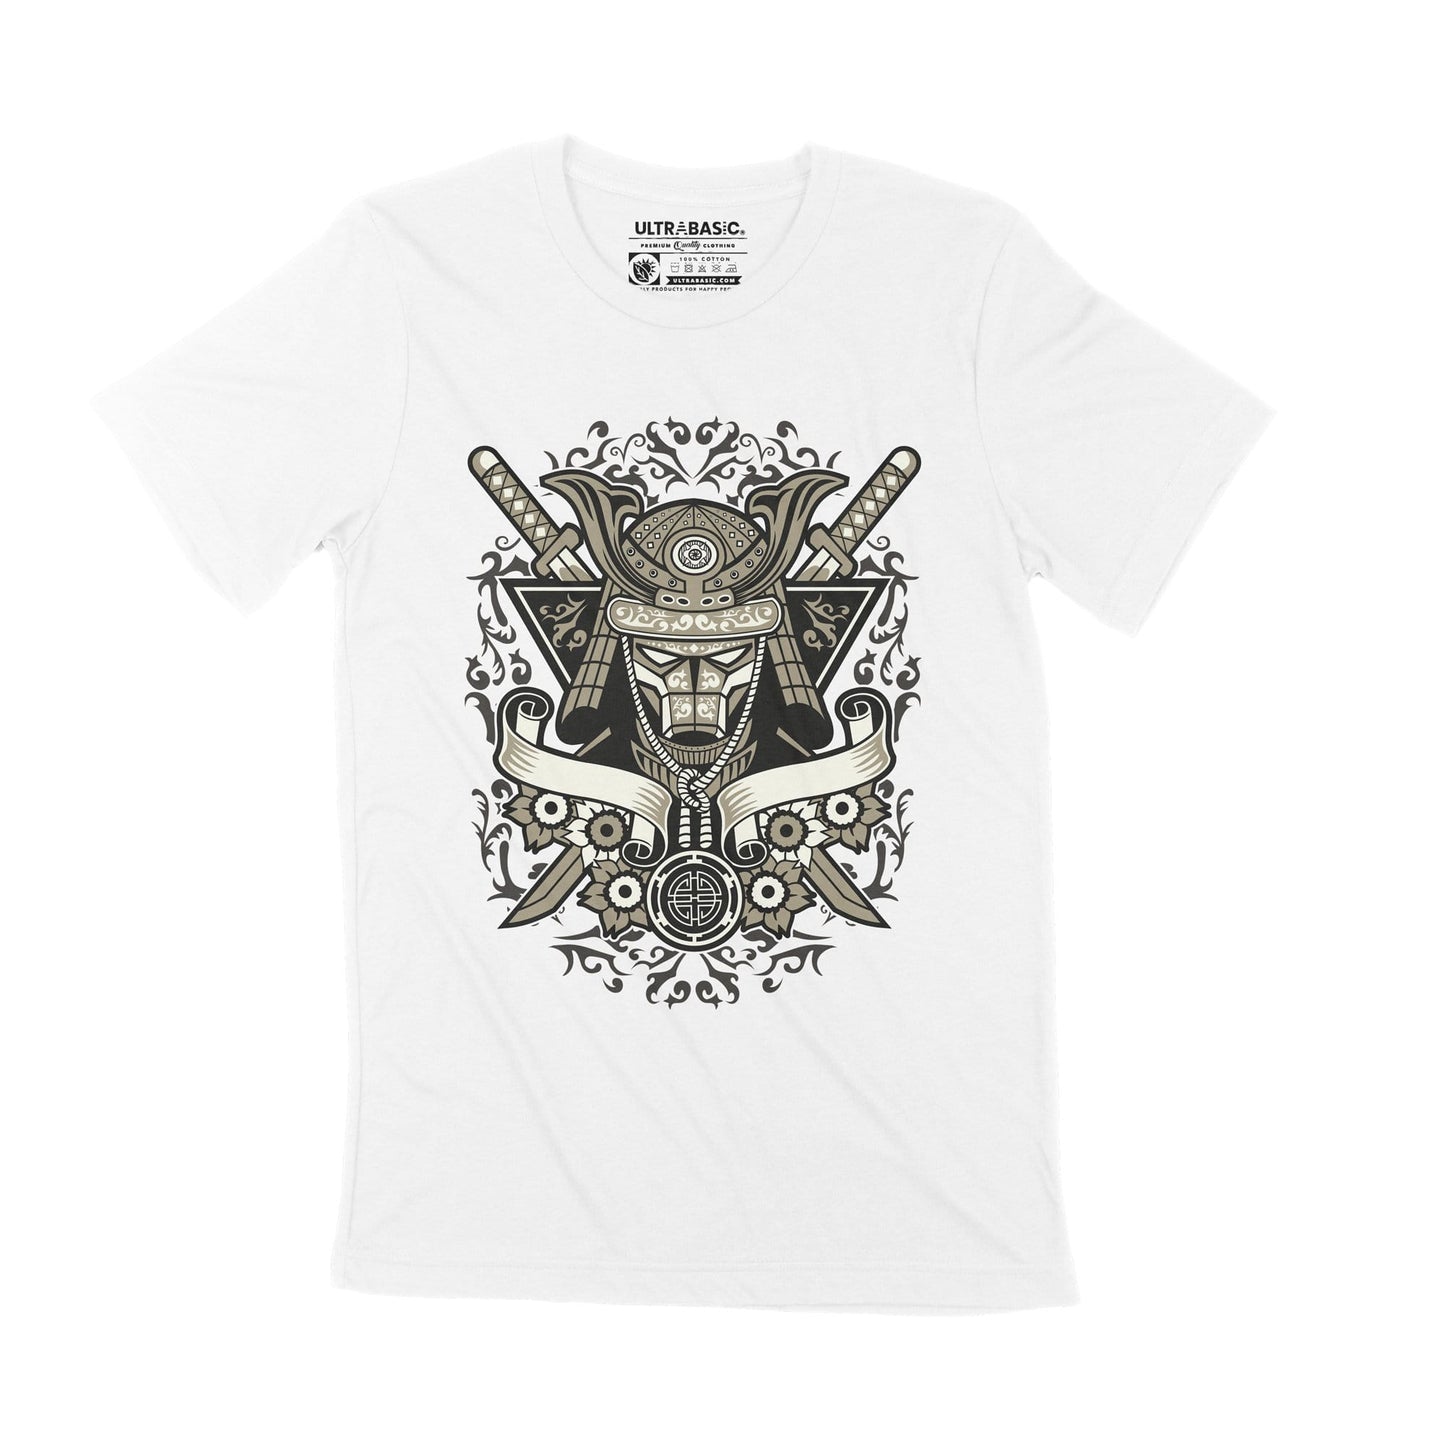 ULTRABASIC Men's Graphic T-Shirt Samurai Warrior - Vintage Adult Tee Shirt